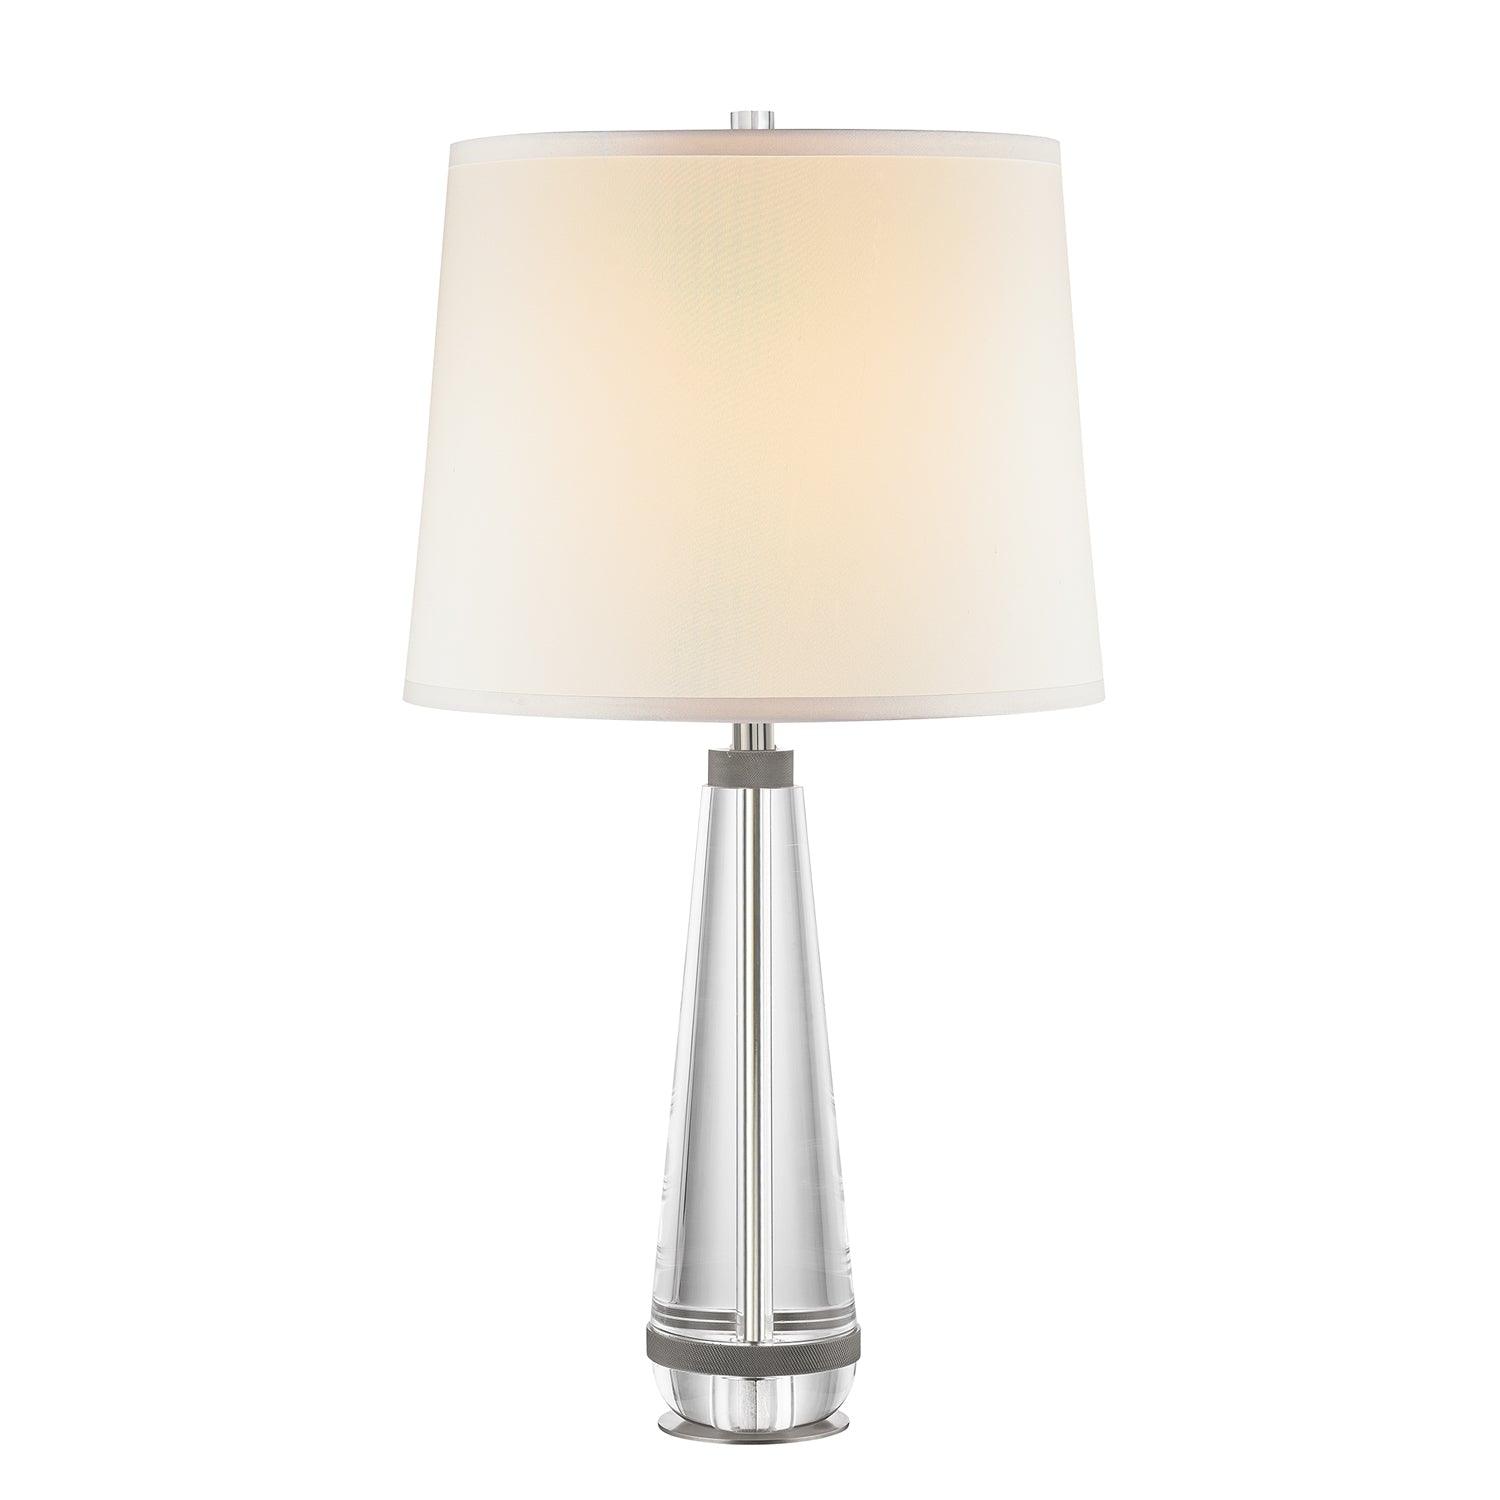 Calista Table lamp Nickel - TL315229PNWS | Alora